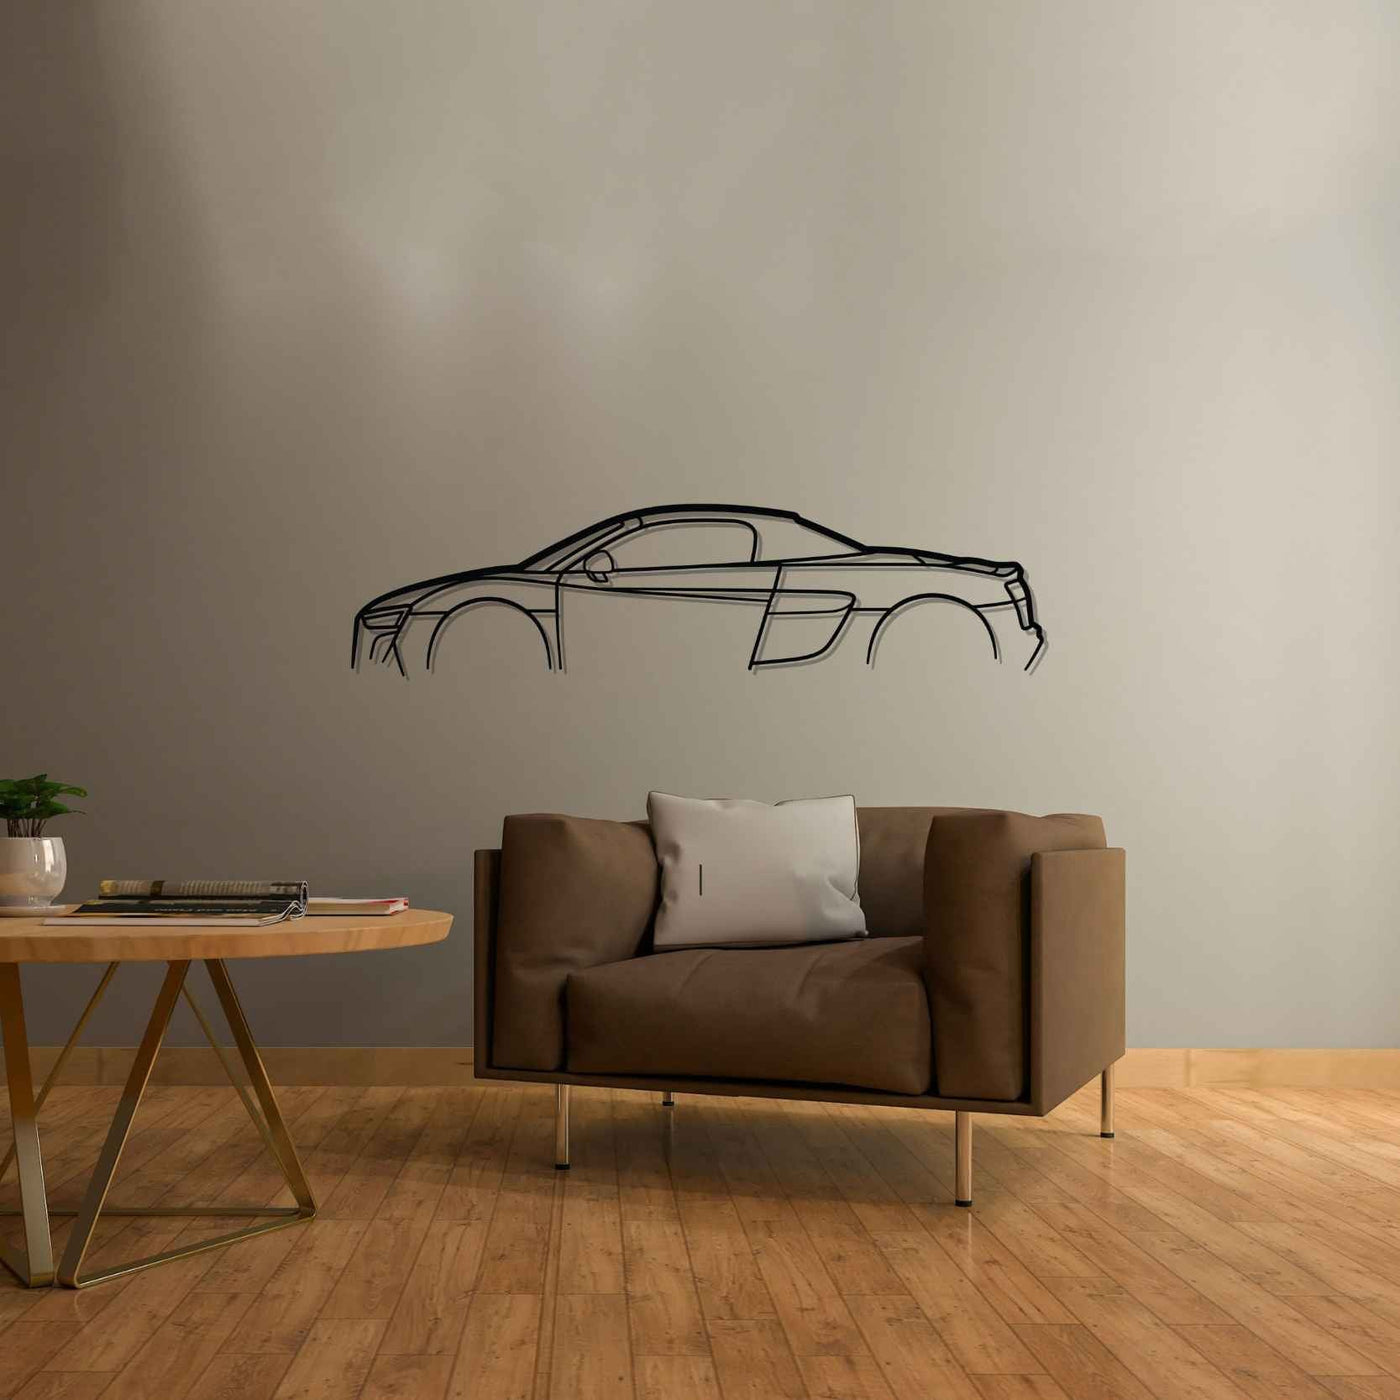 R8 Spyder Mk2 Classic Silhouette Metal Wall Art